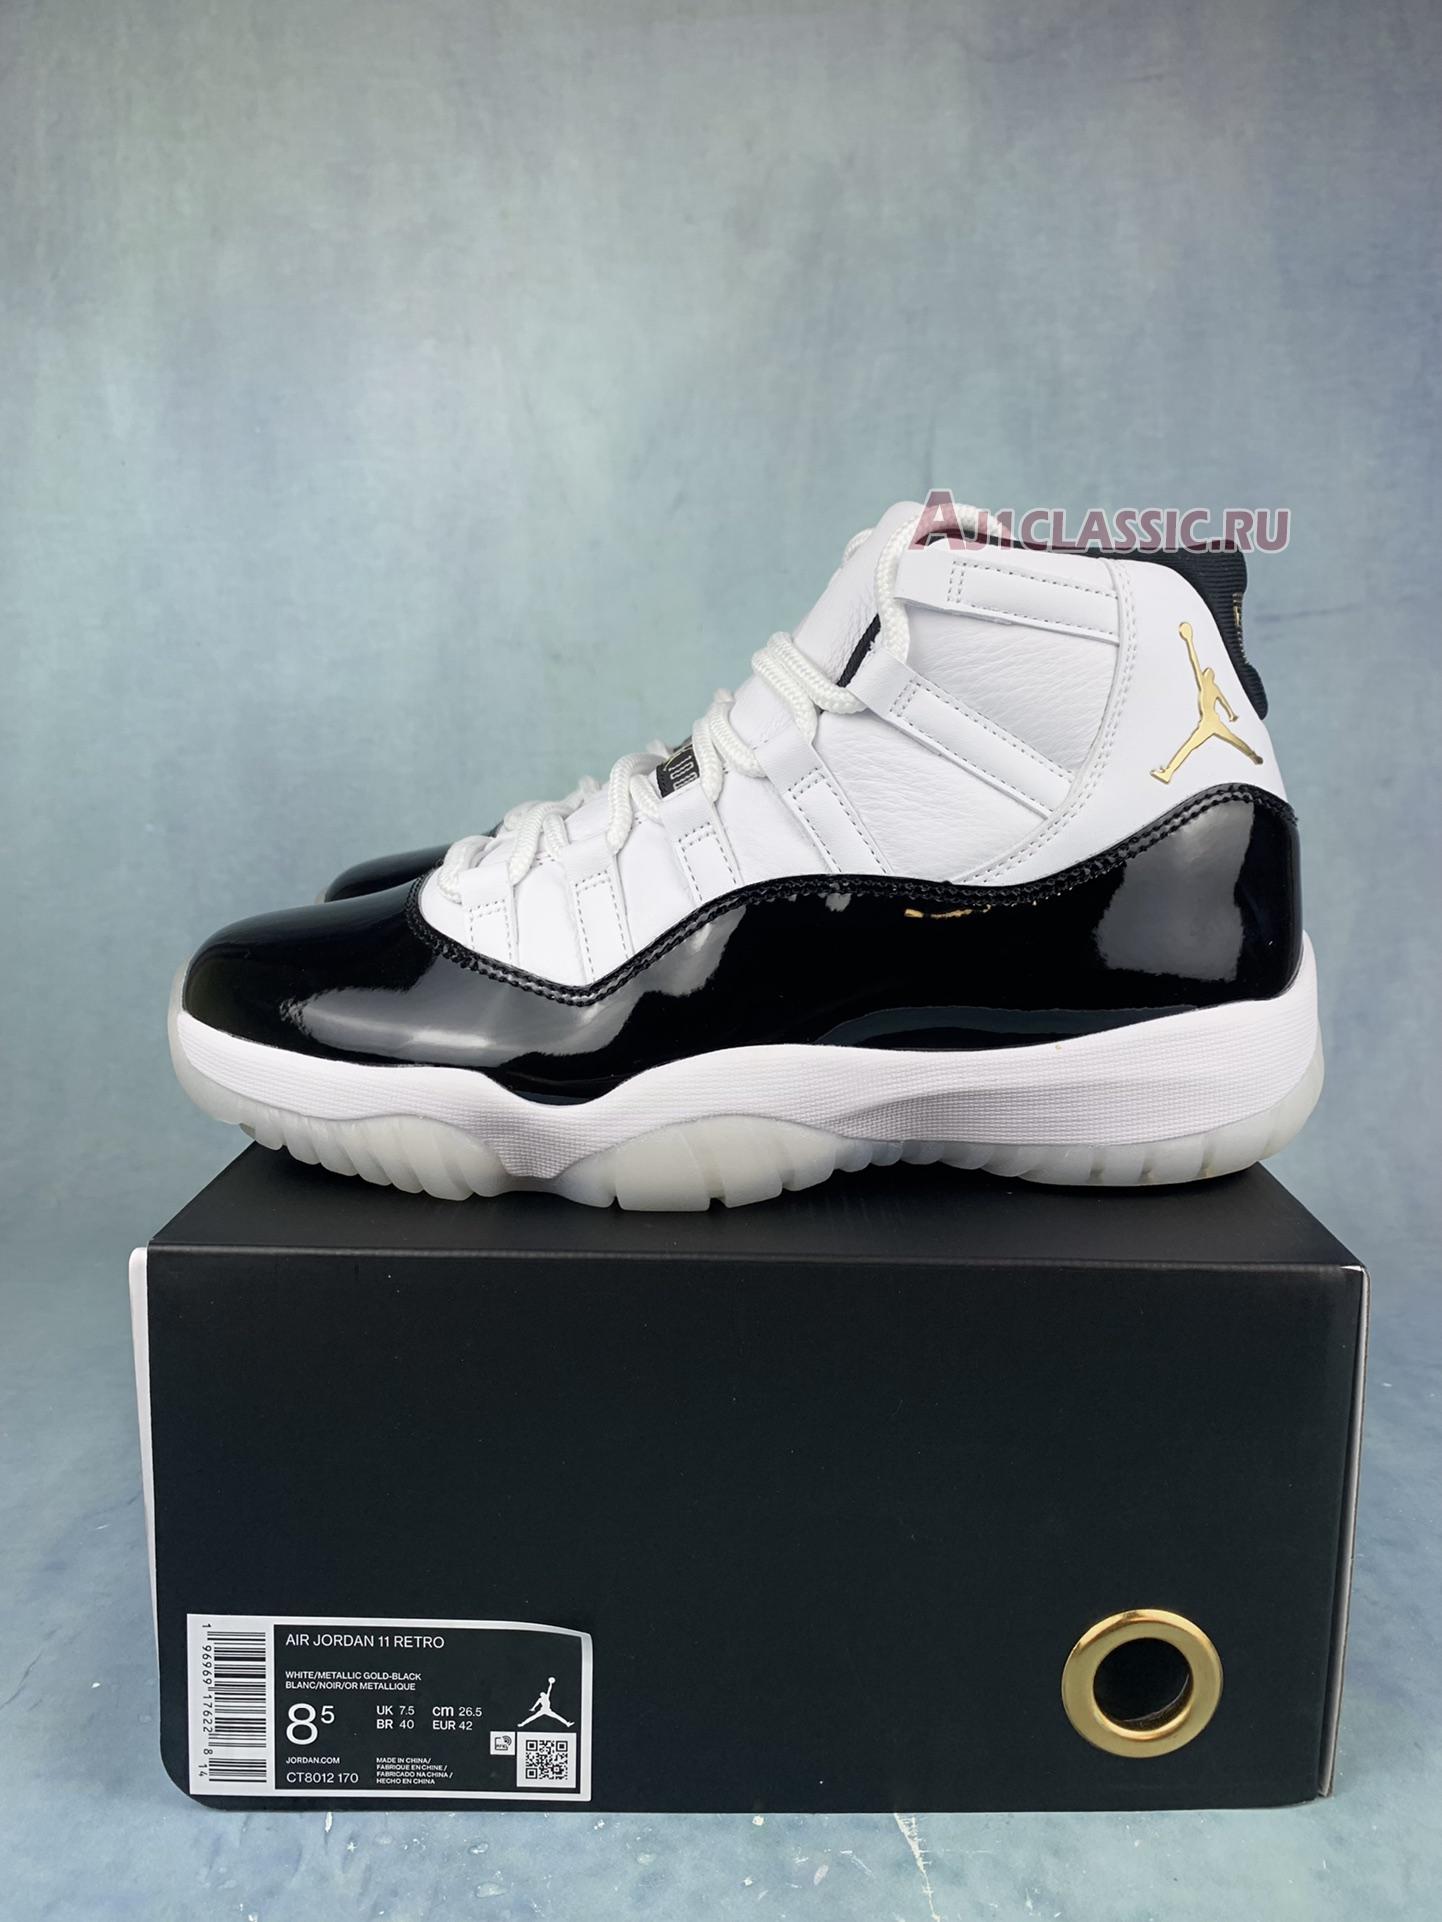 Air Jordan 11 Retro Defining Moments 2023 CT8012-170 White/Black/Metallic Gold Sneakers